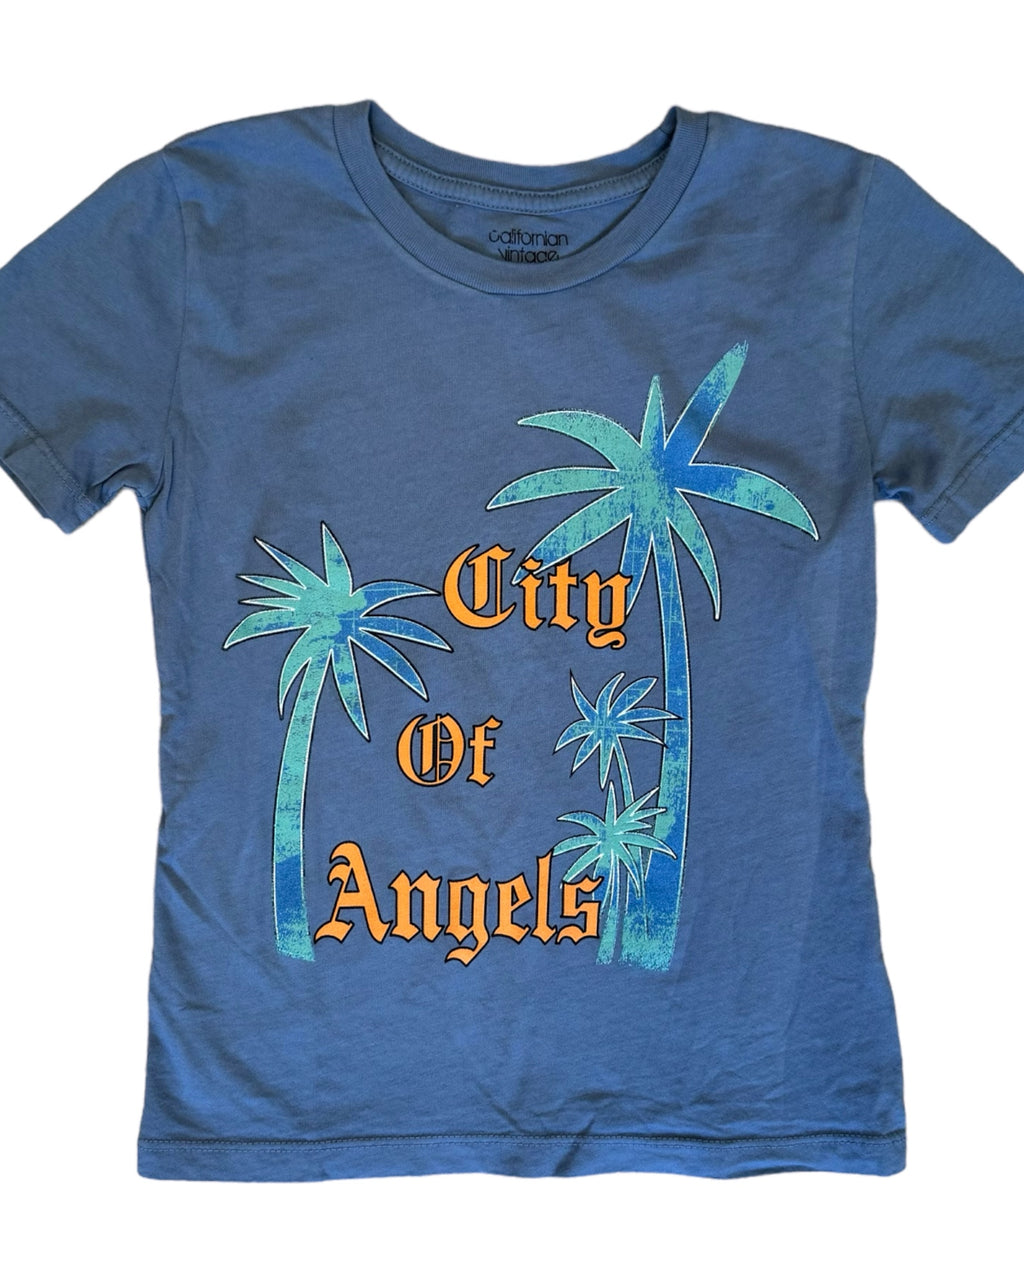 City of Angels Tee